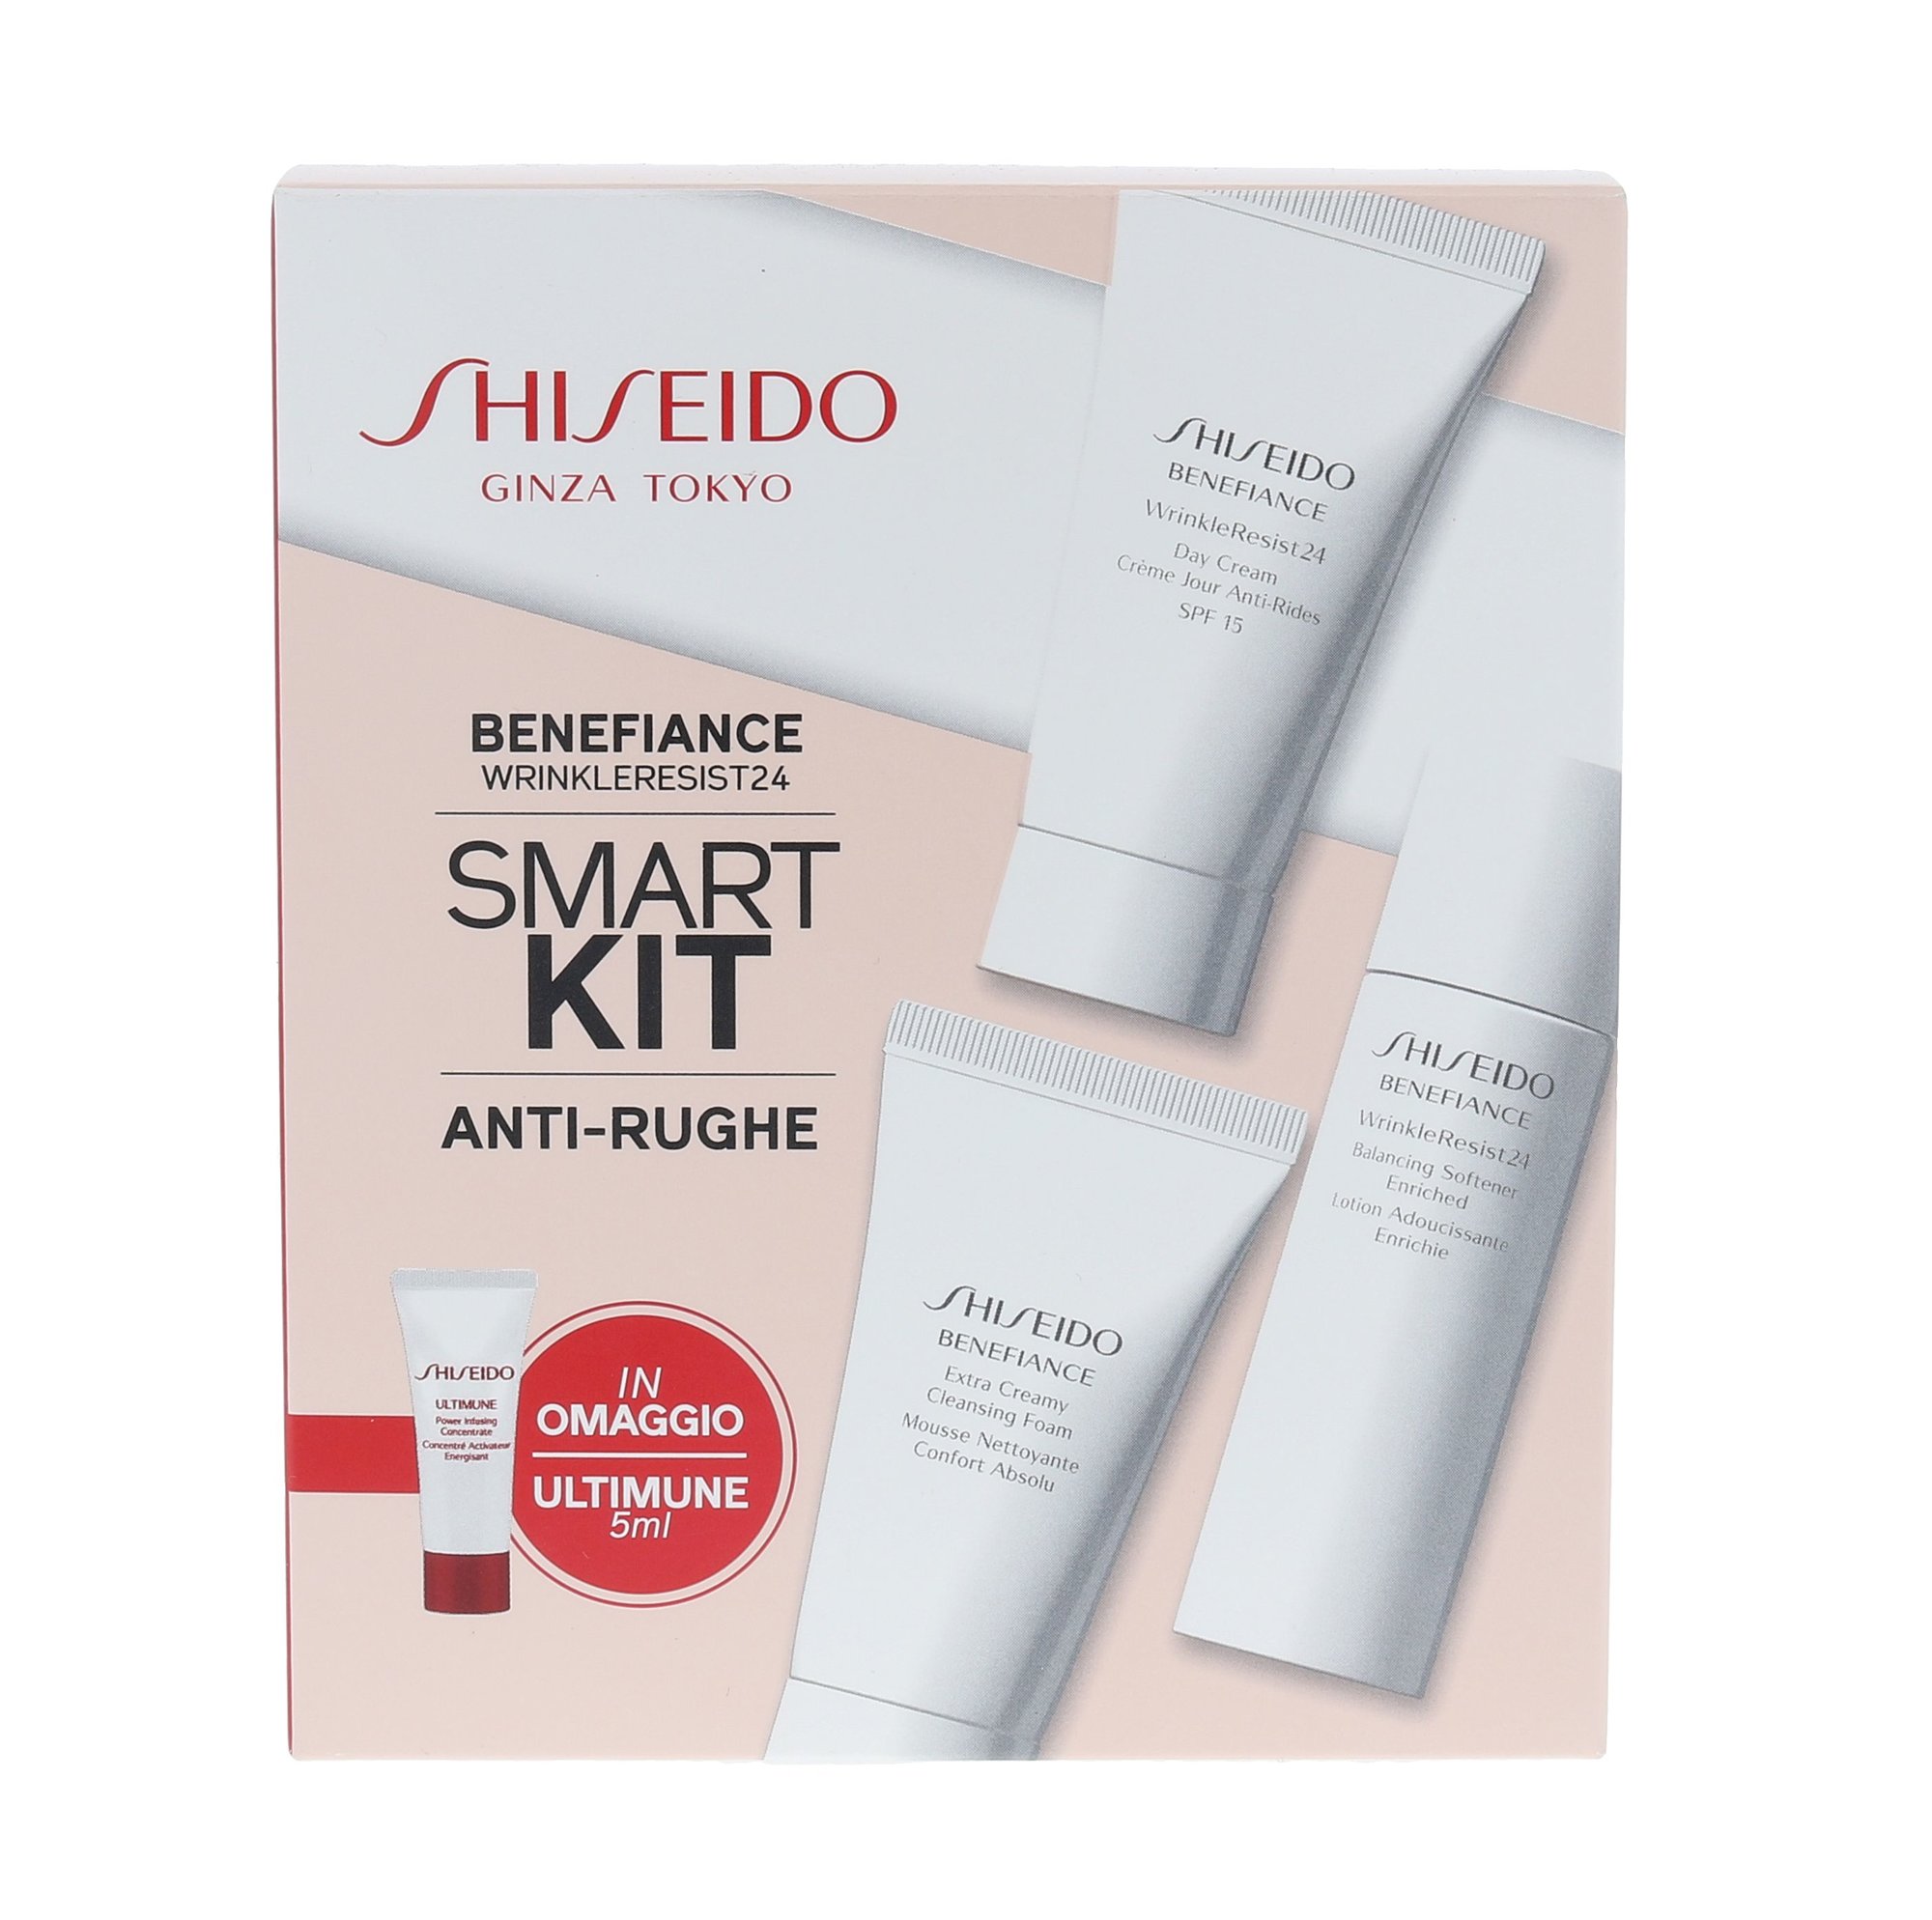 Shiseido Benefiance Wrinkle Resist 24 30ml WrinkleResist24 Day Cream SPF15 30 ml + WrinkleResist24 Softener Enriched 30 ml +  Cleansing Foam 30 m + ULTIMUNE Power Infusing Concentrate 5 ml dieninis kremas Rinkinys (Pažeista pakuotė)